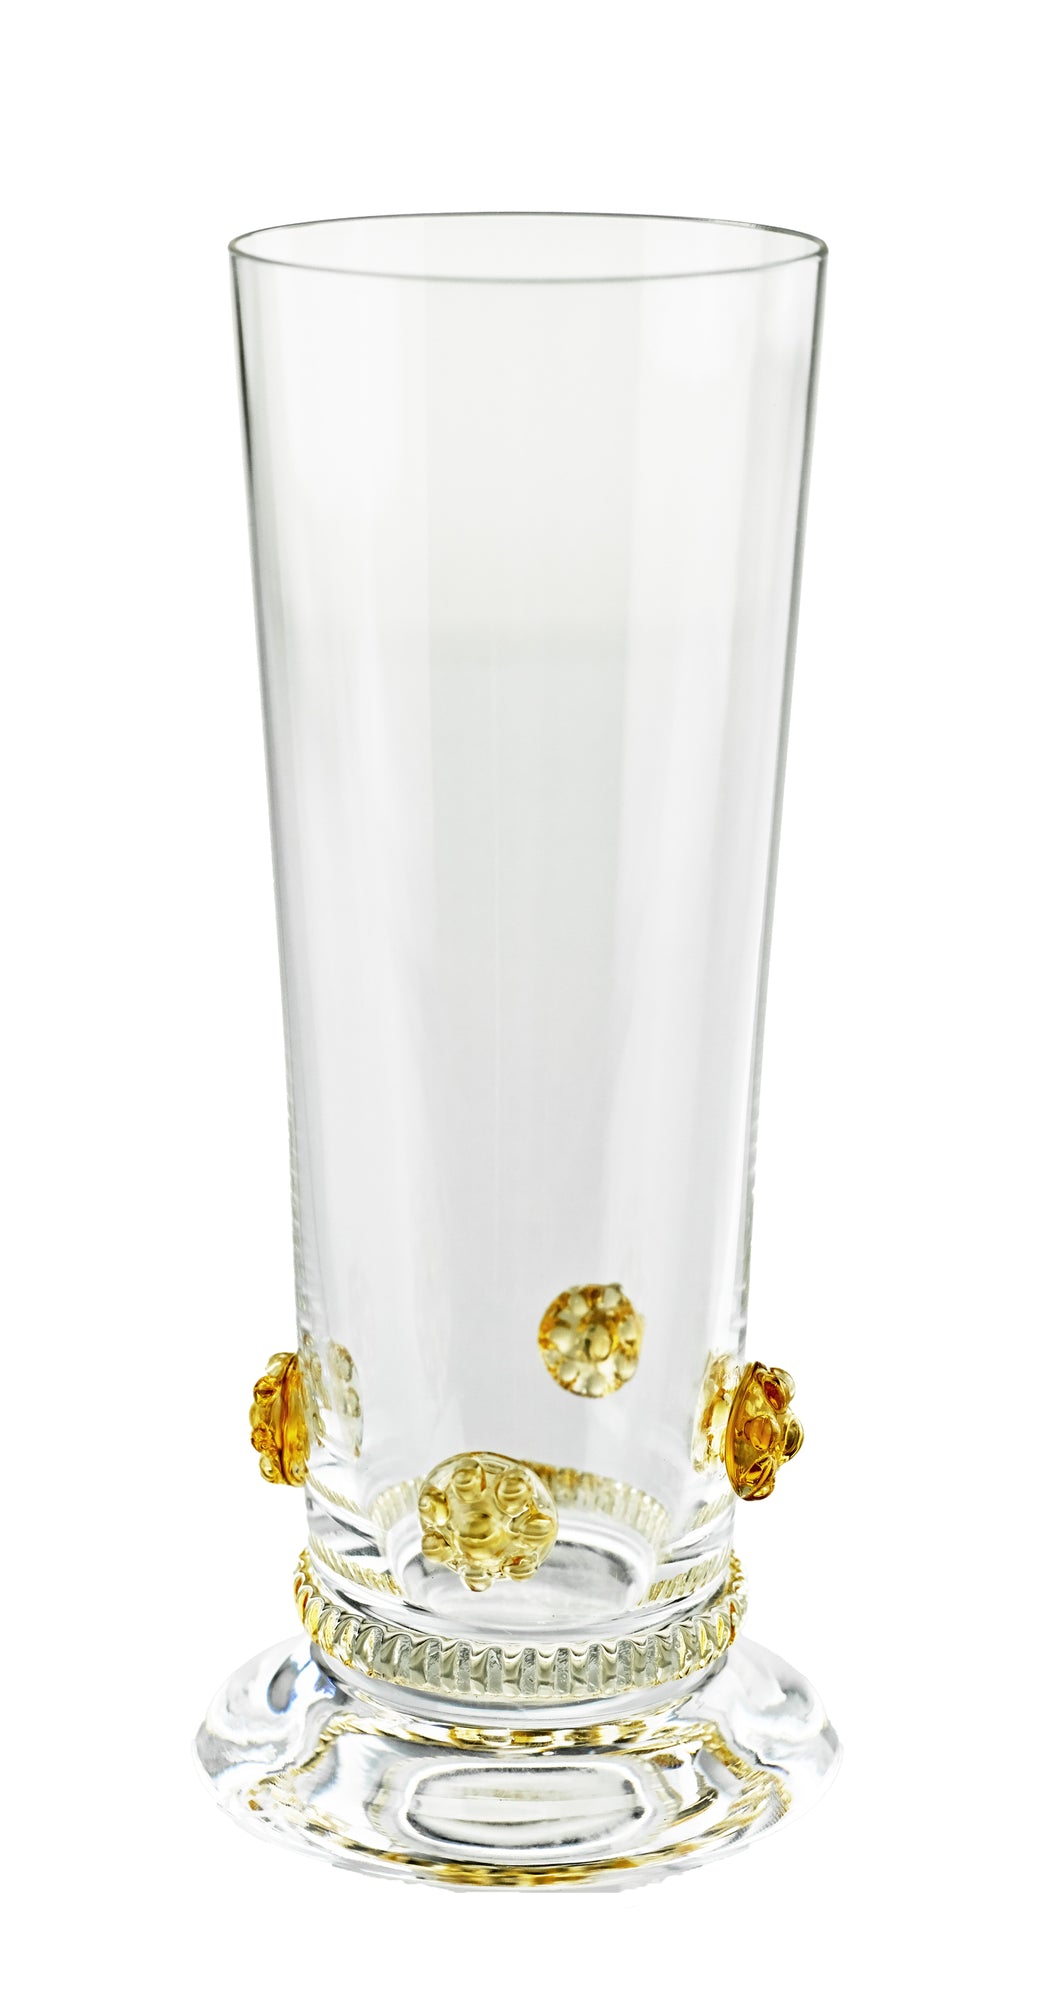 BACCHUS bernstein, Rosetten & Radlband - Champagnerbecher 132 mm